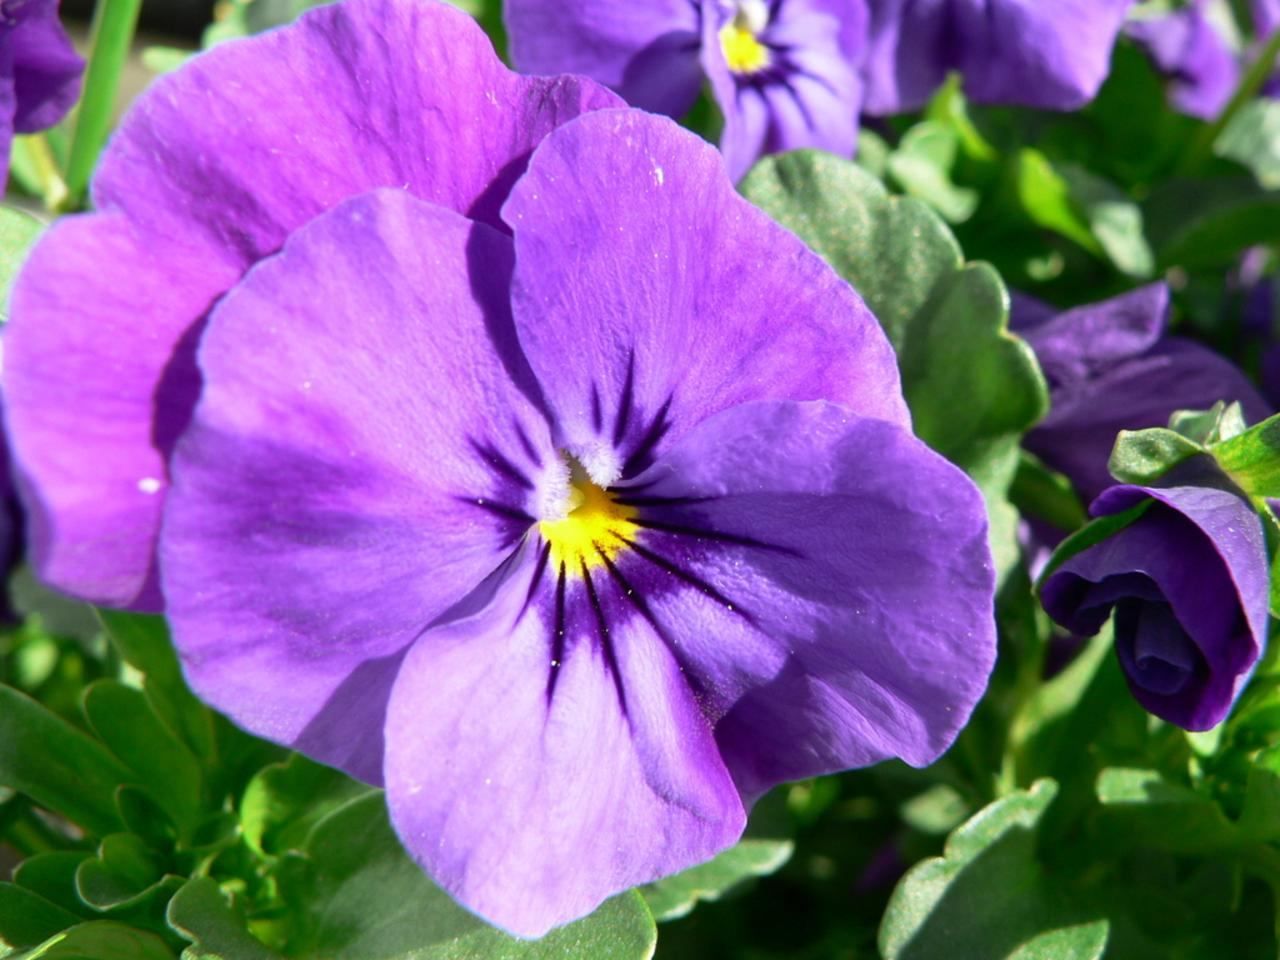 File:Purple pansy flower.jpg - Wikimedia Commons